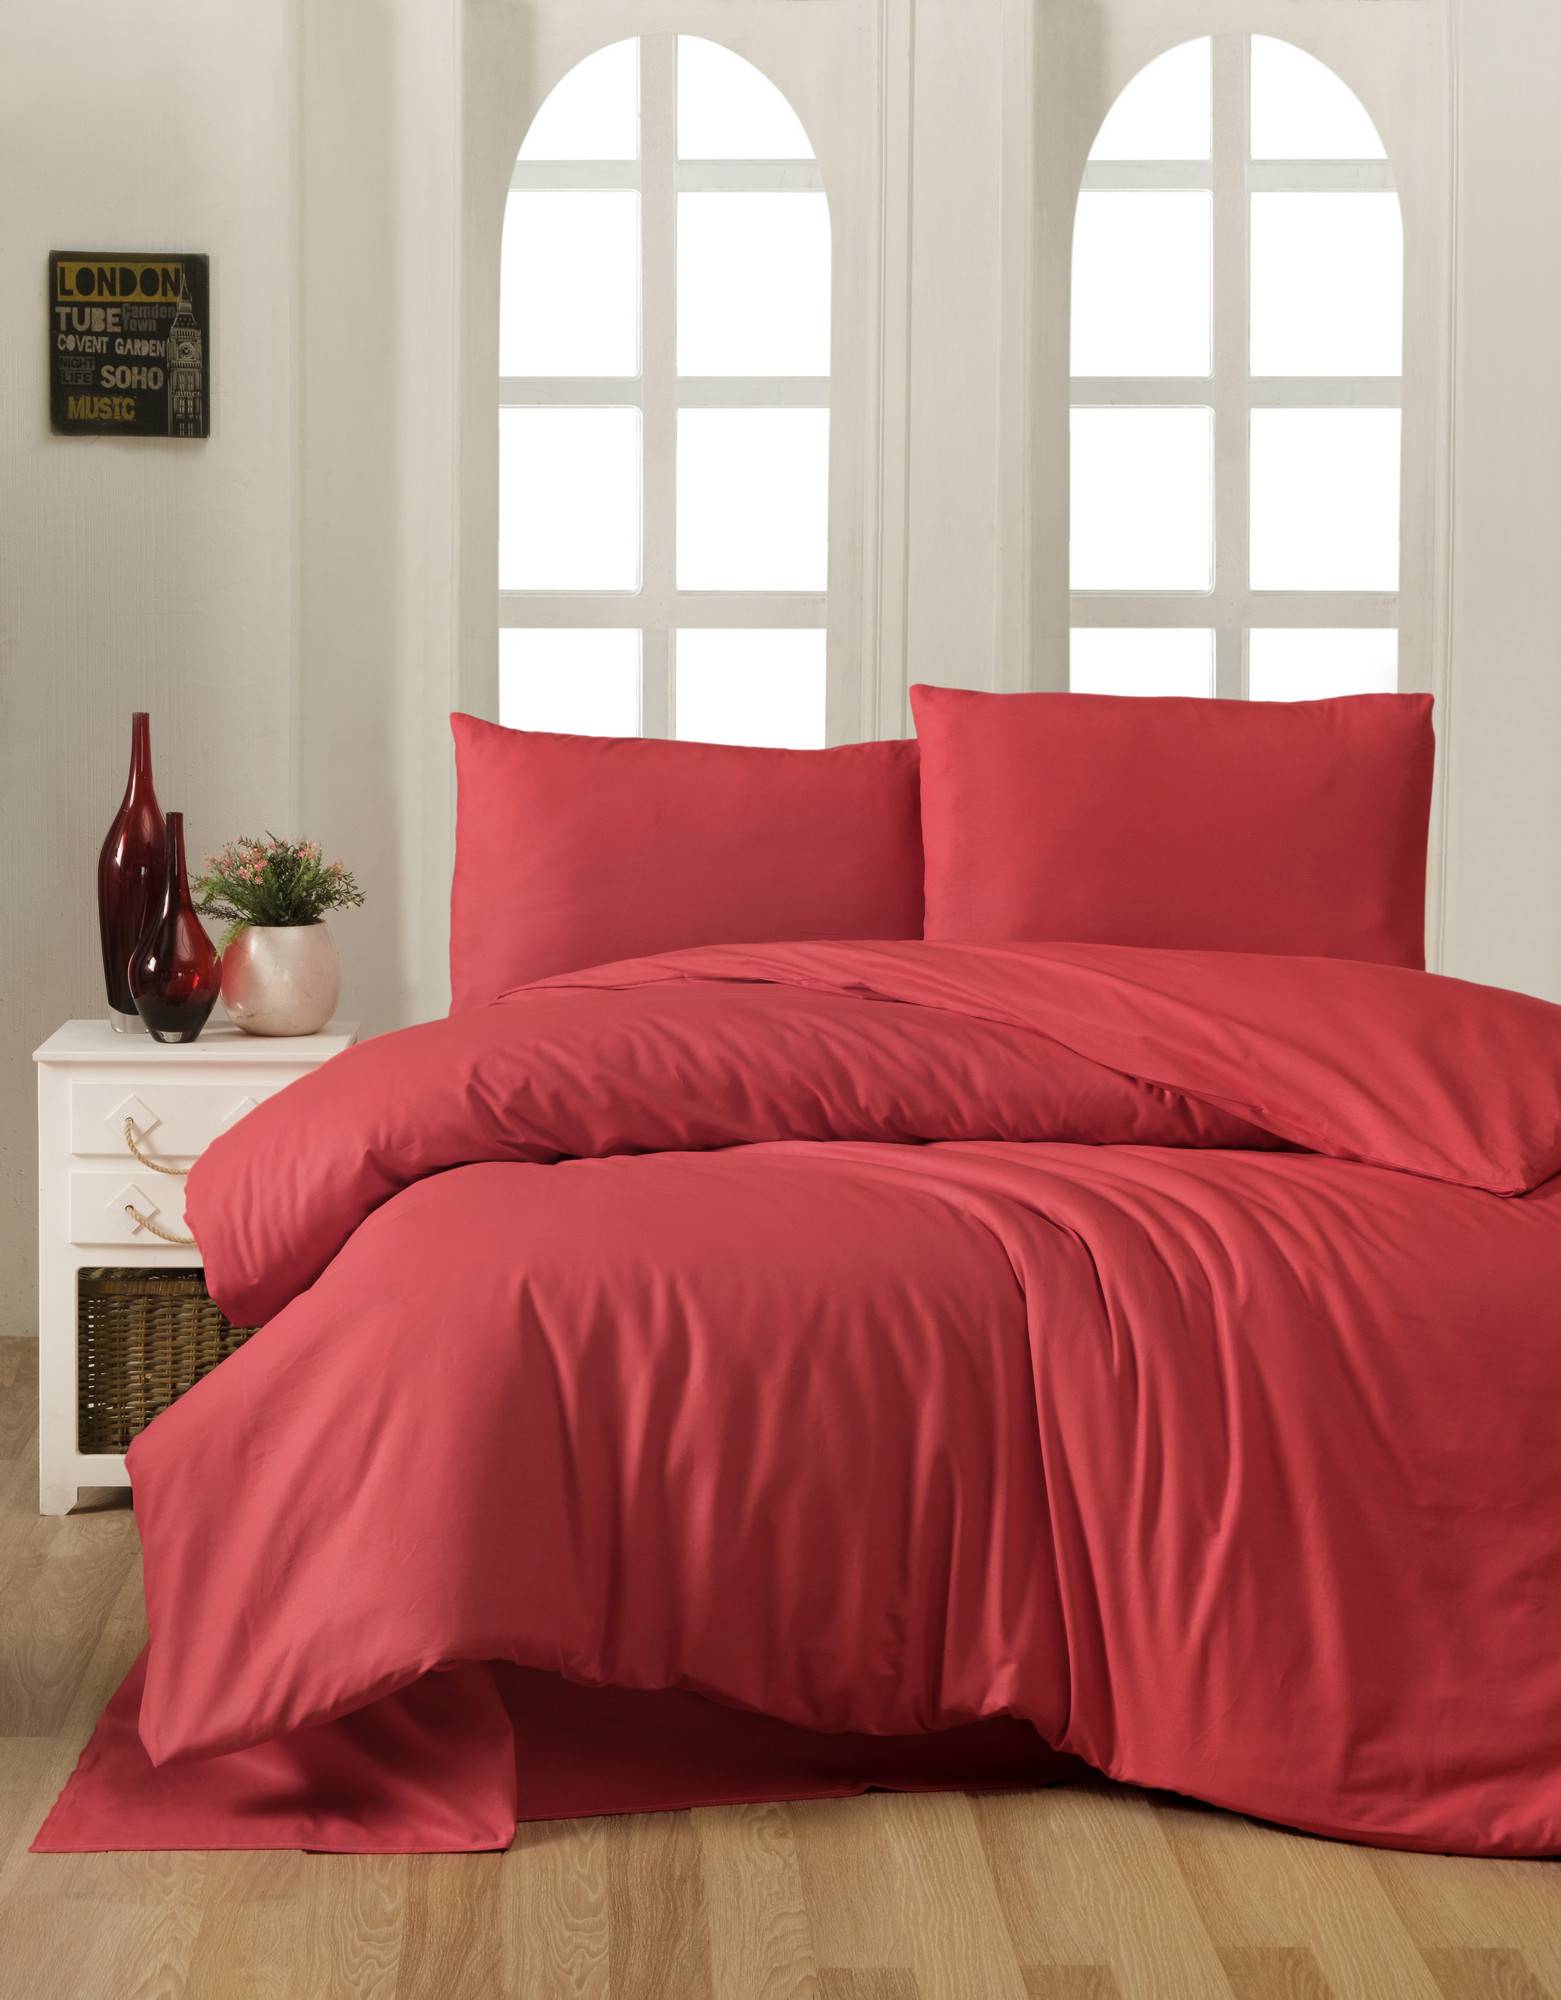 Set Bettdeckenbezug 260x220cm und 2 Kissenbezüge 60x60cm Lovina uni 100% baumwollstoff Rot